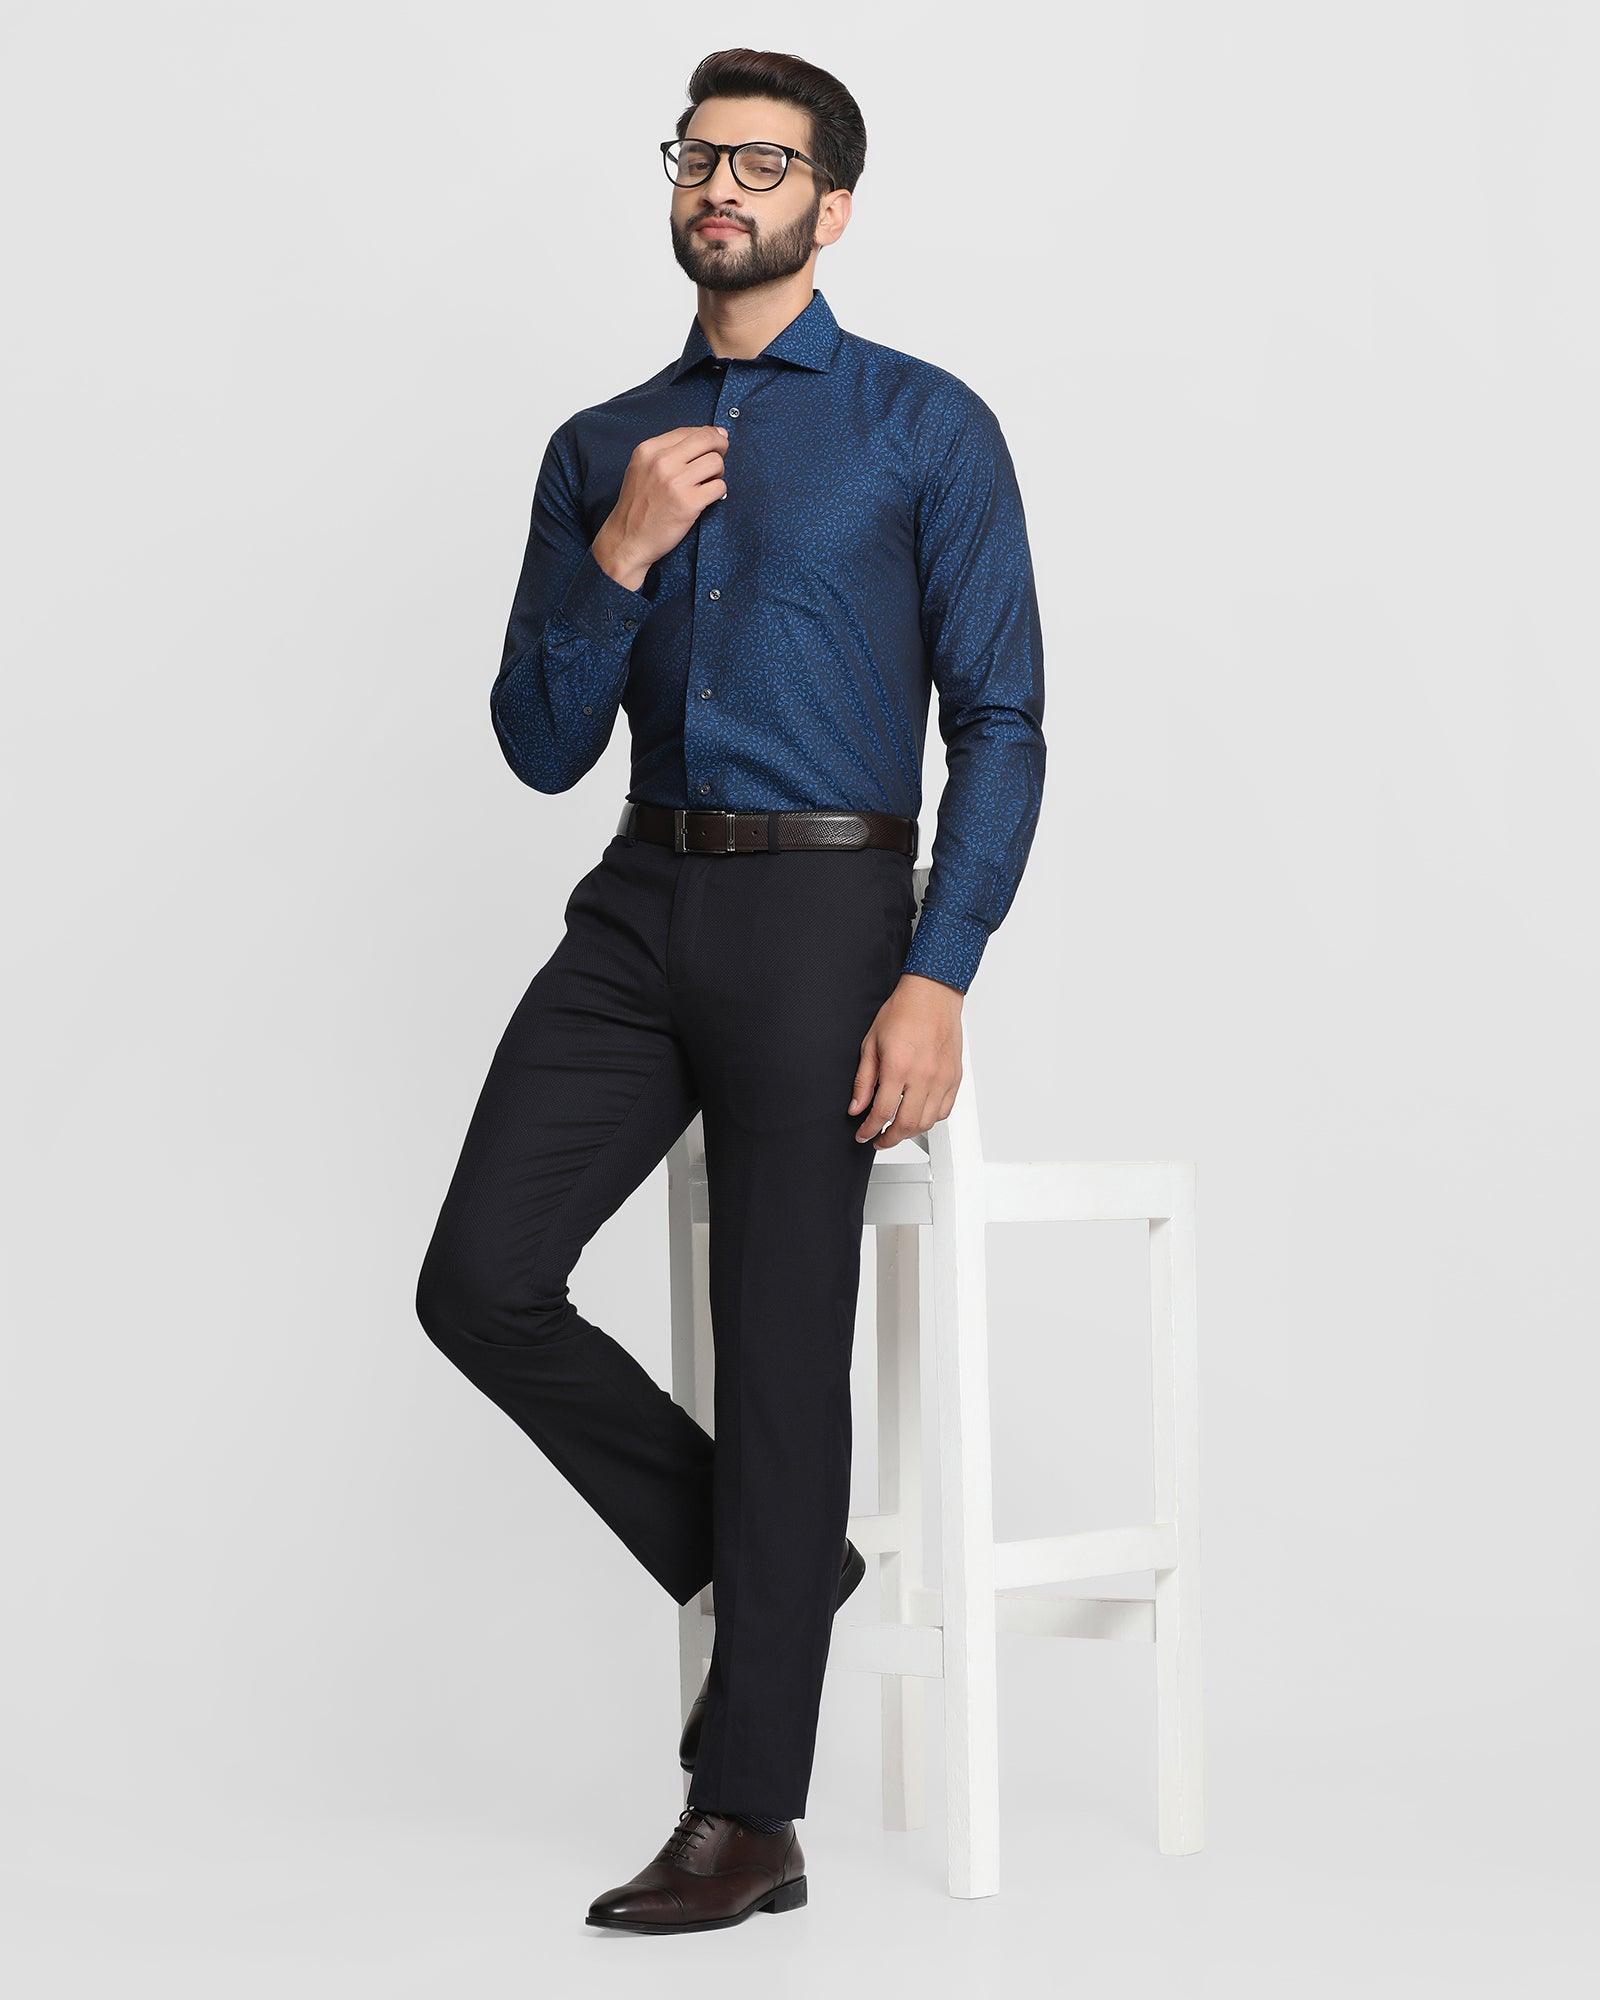 Blue Shirt Combination Pants Ideas | Blue Shirt Matching Pants -  TiptopGents | Black pants outfit mens, Black pants men, Blue shirt black  pants